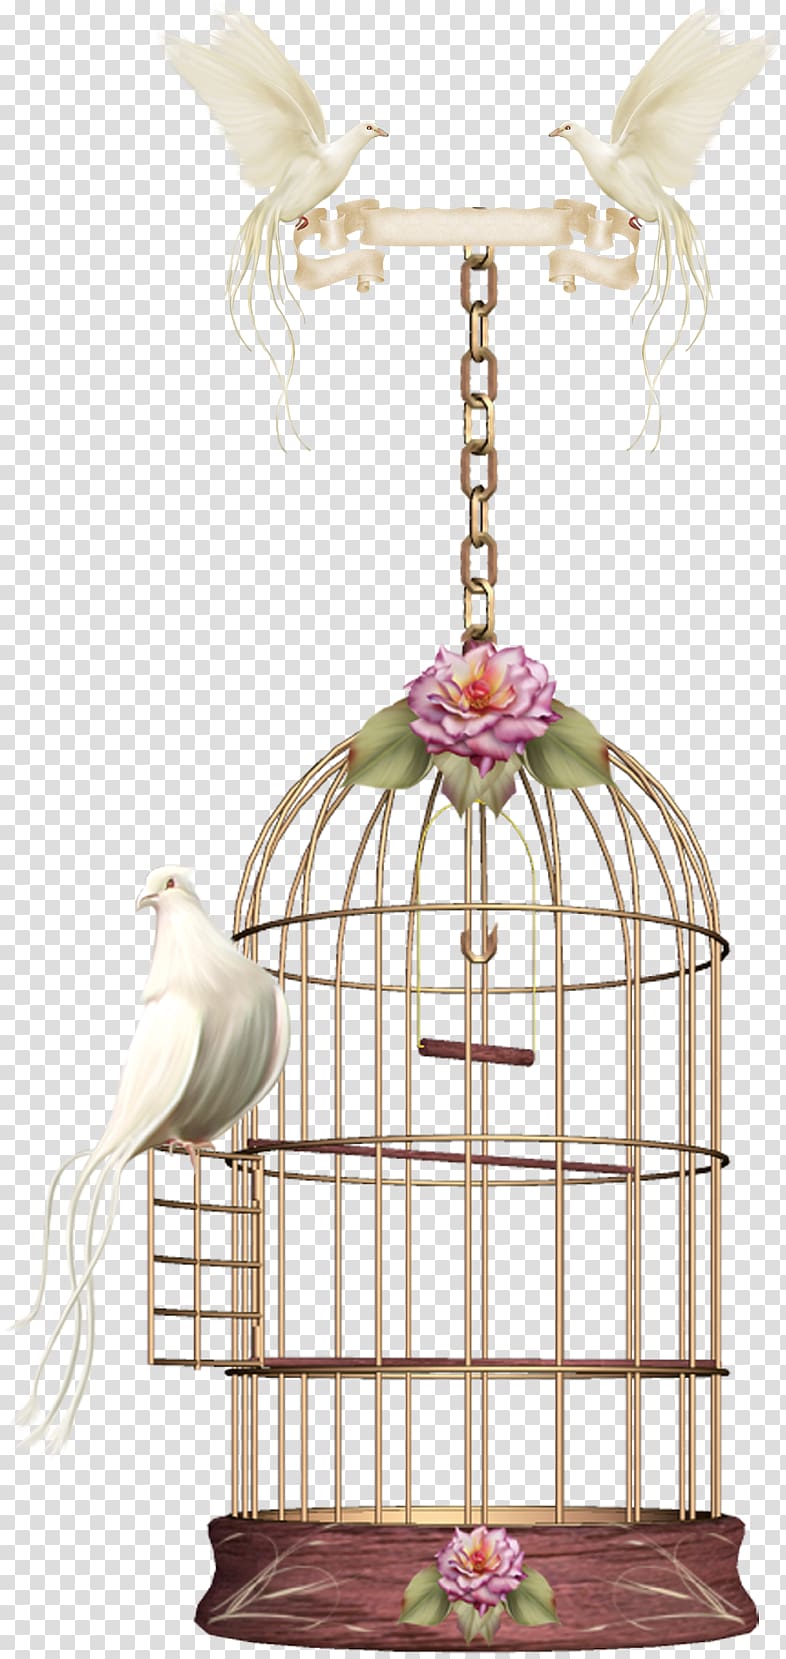 white bird on cage, Birdcage Parrot, birdcage transparent background PNG clipart